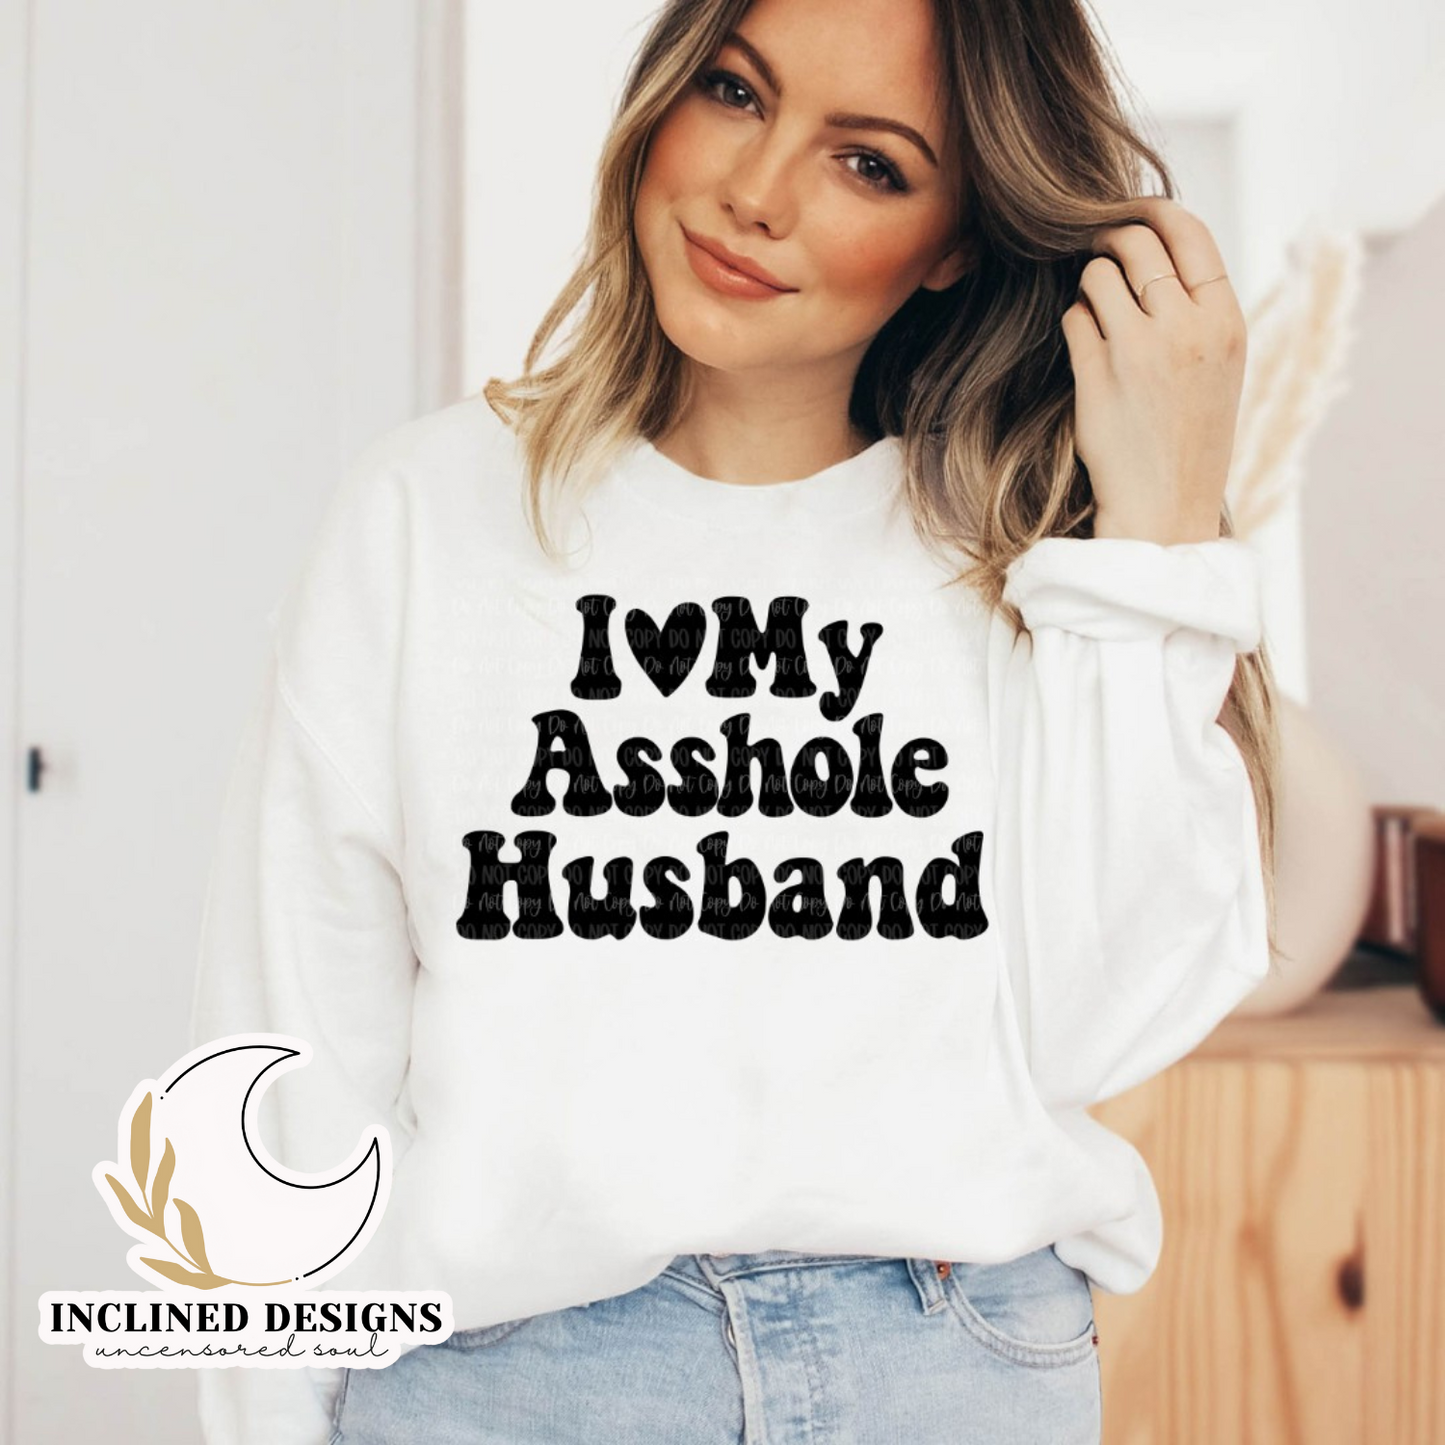 I Love My Asshole Husband